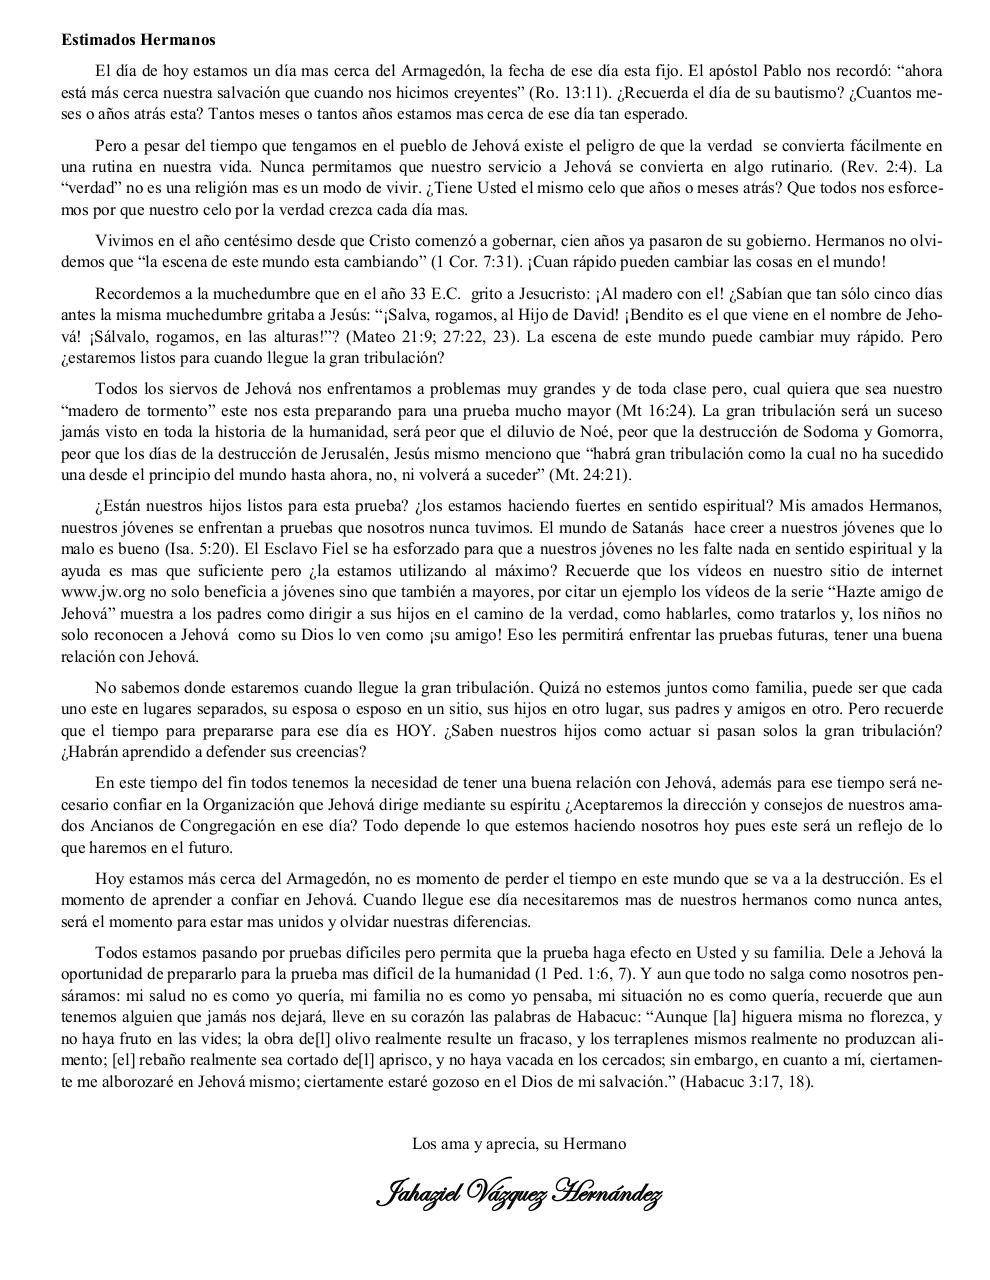 Vista previa del archivo PDF emt2014-s-de-ivis-nu-ez.pdf